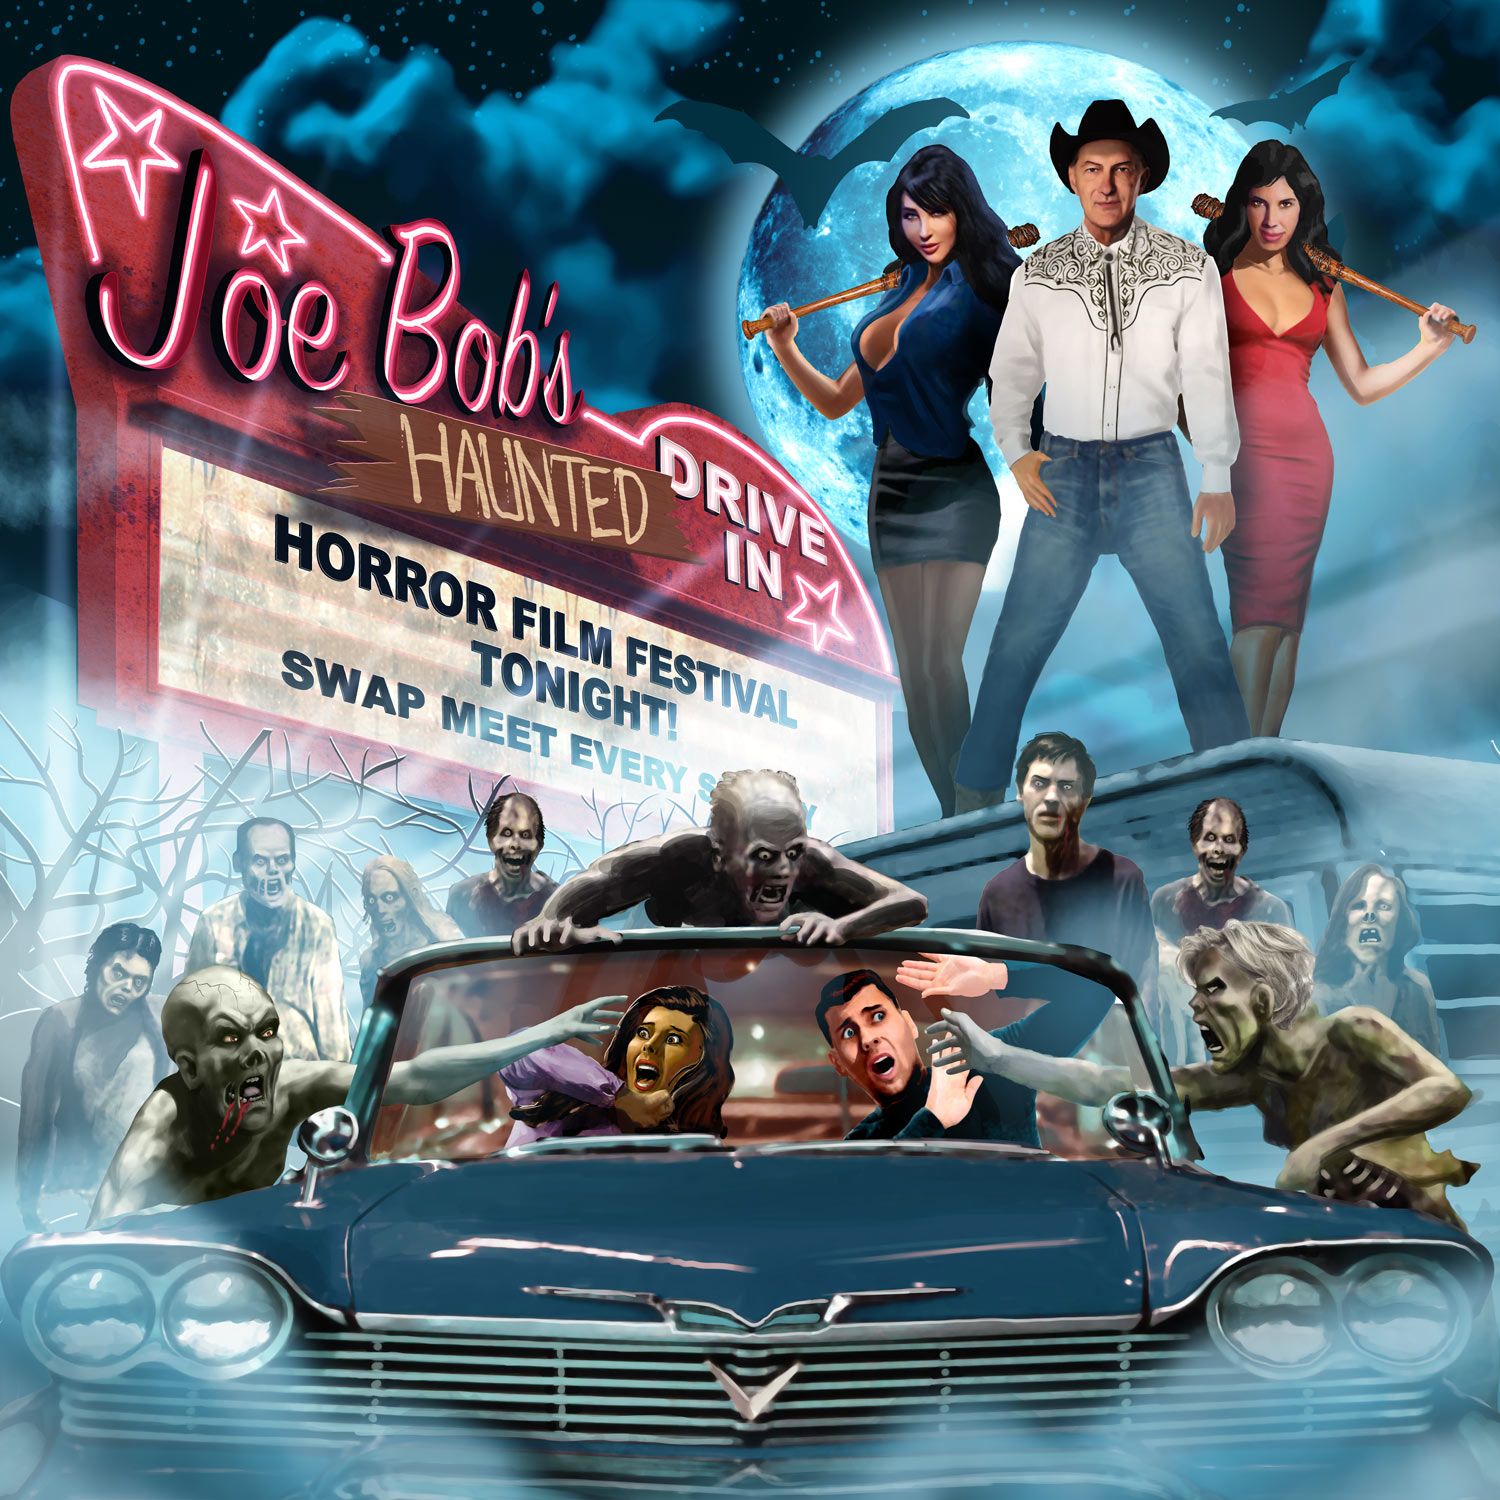 Joe Bob's Haunted Drive-In